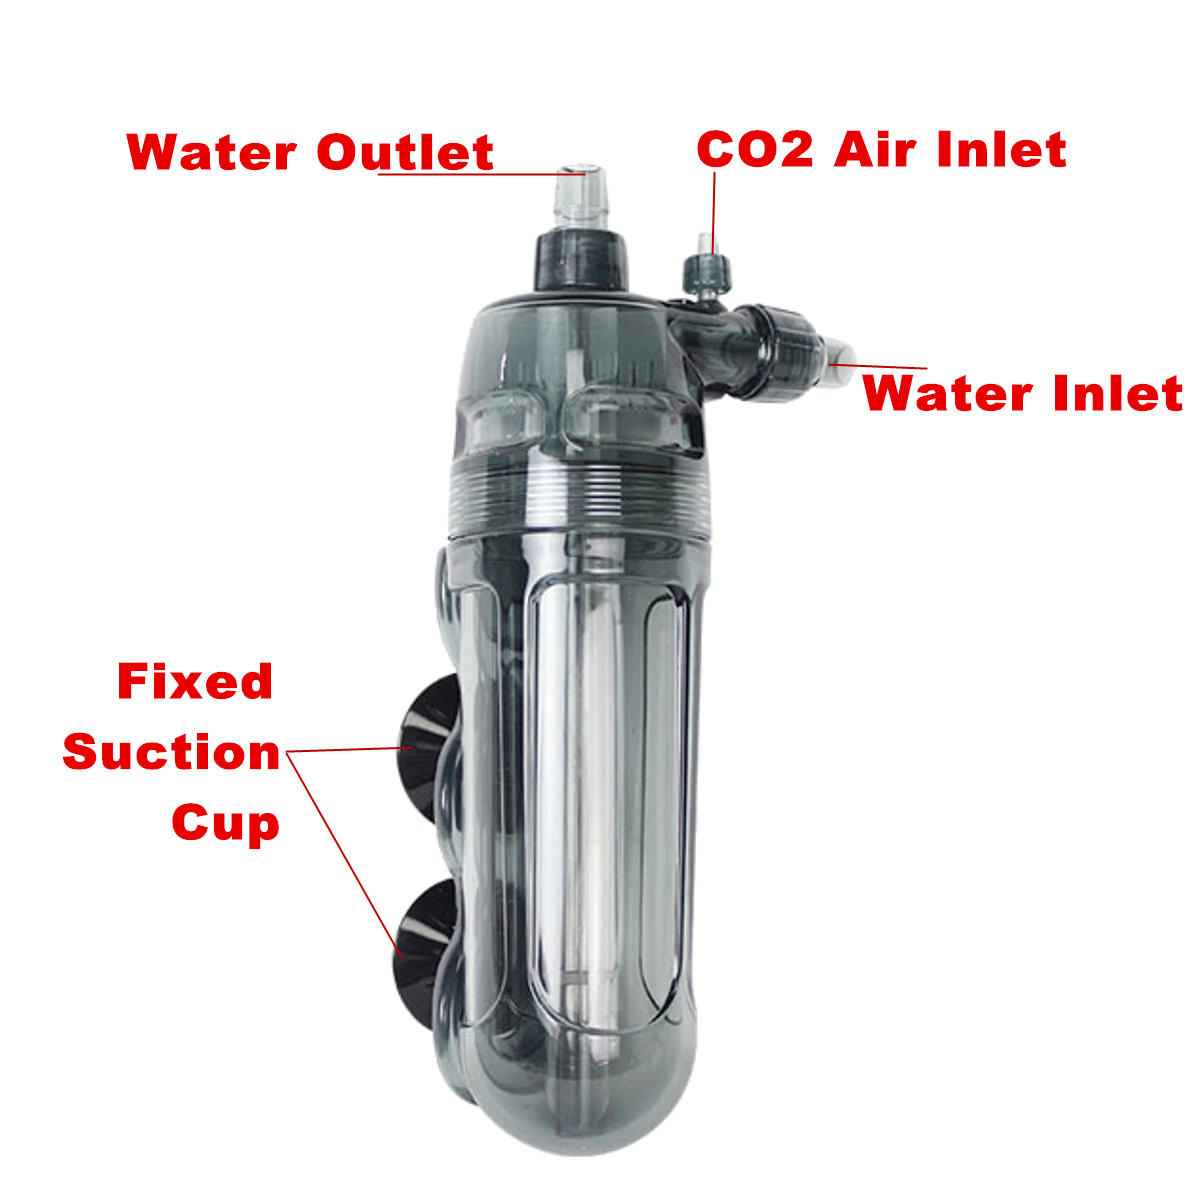 External-Aquarium-Fish-Tank-Diffuser-Reactor-CO2-Atomizer-Water-Plants-Equipment-1390604